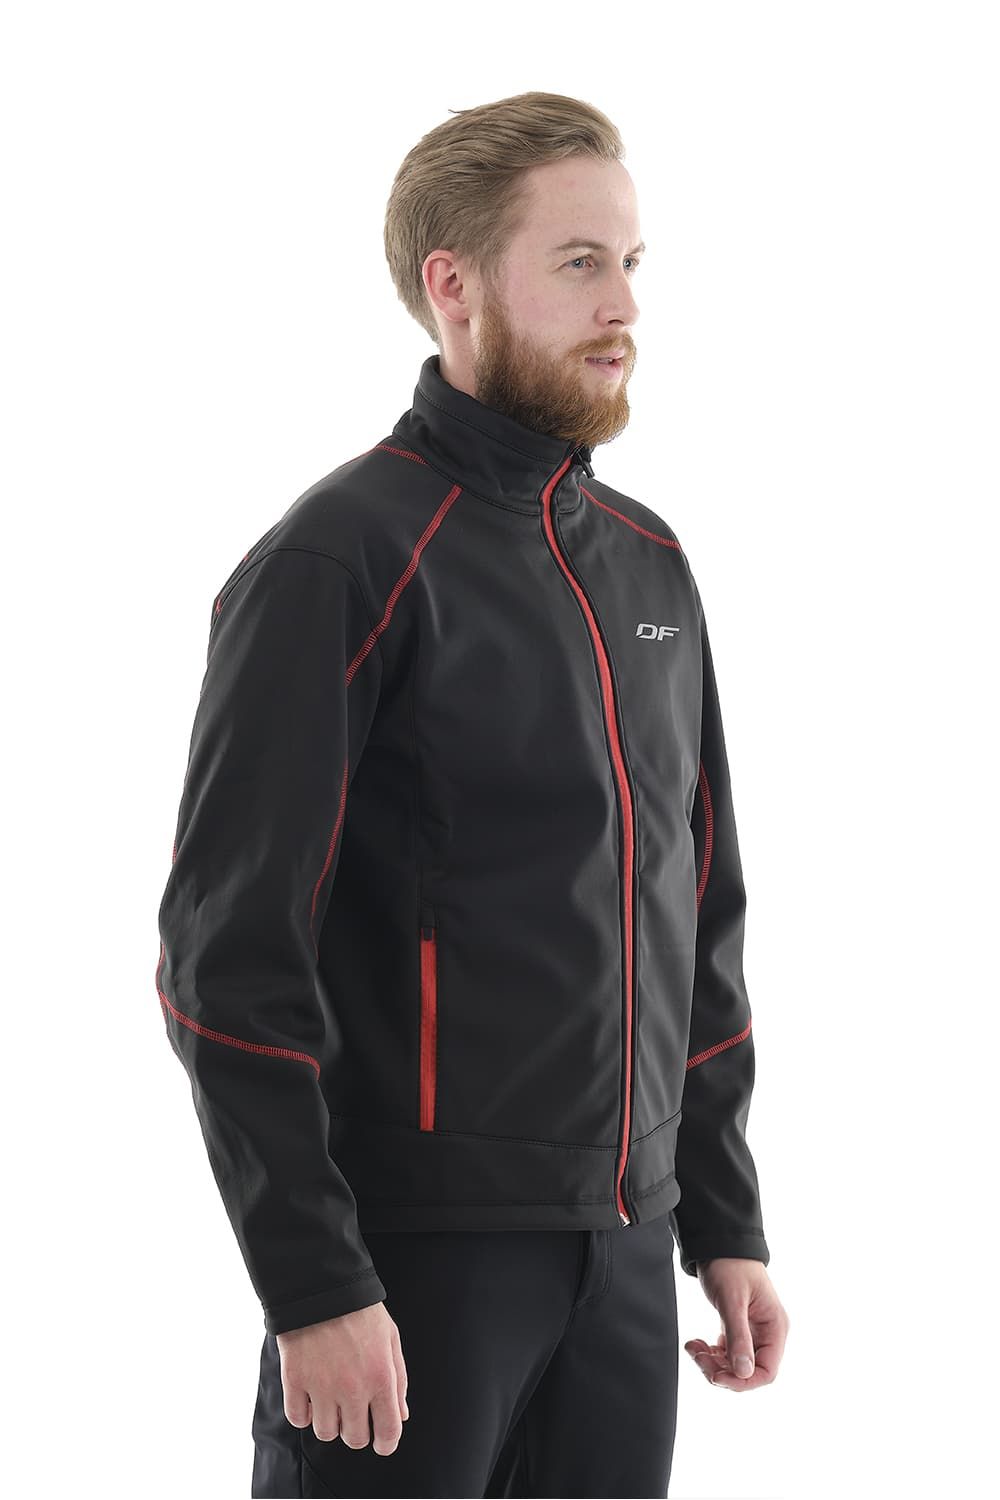 Куртка Explorer Black-Red  мужская, Softshell в интернет-магазине Мотомода